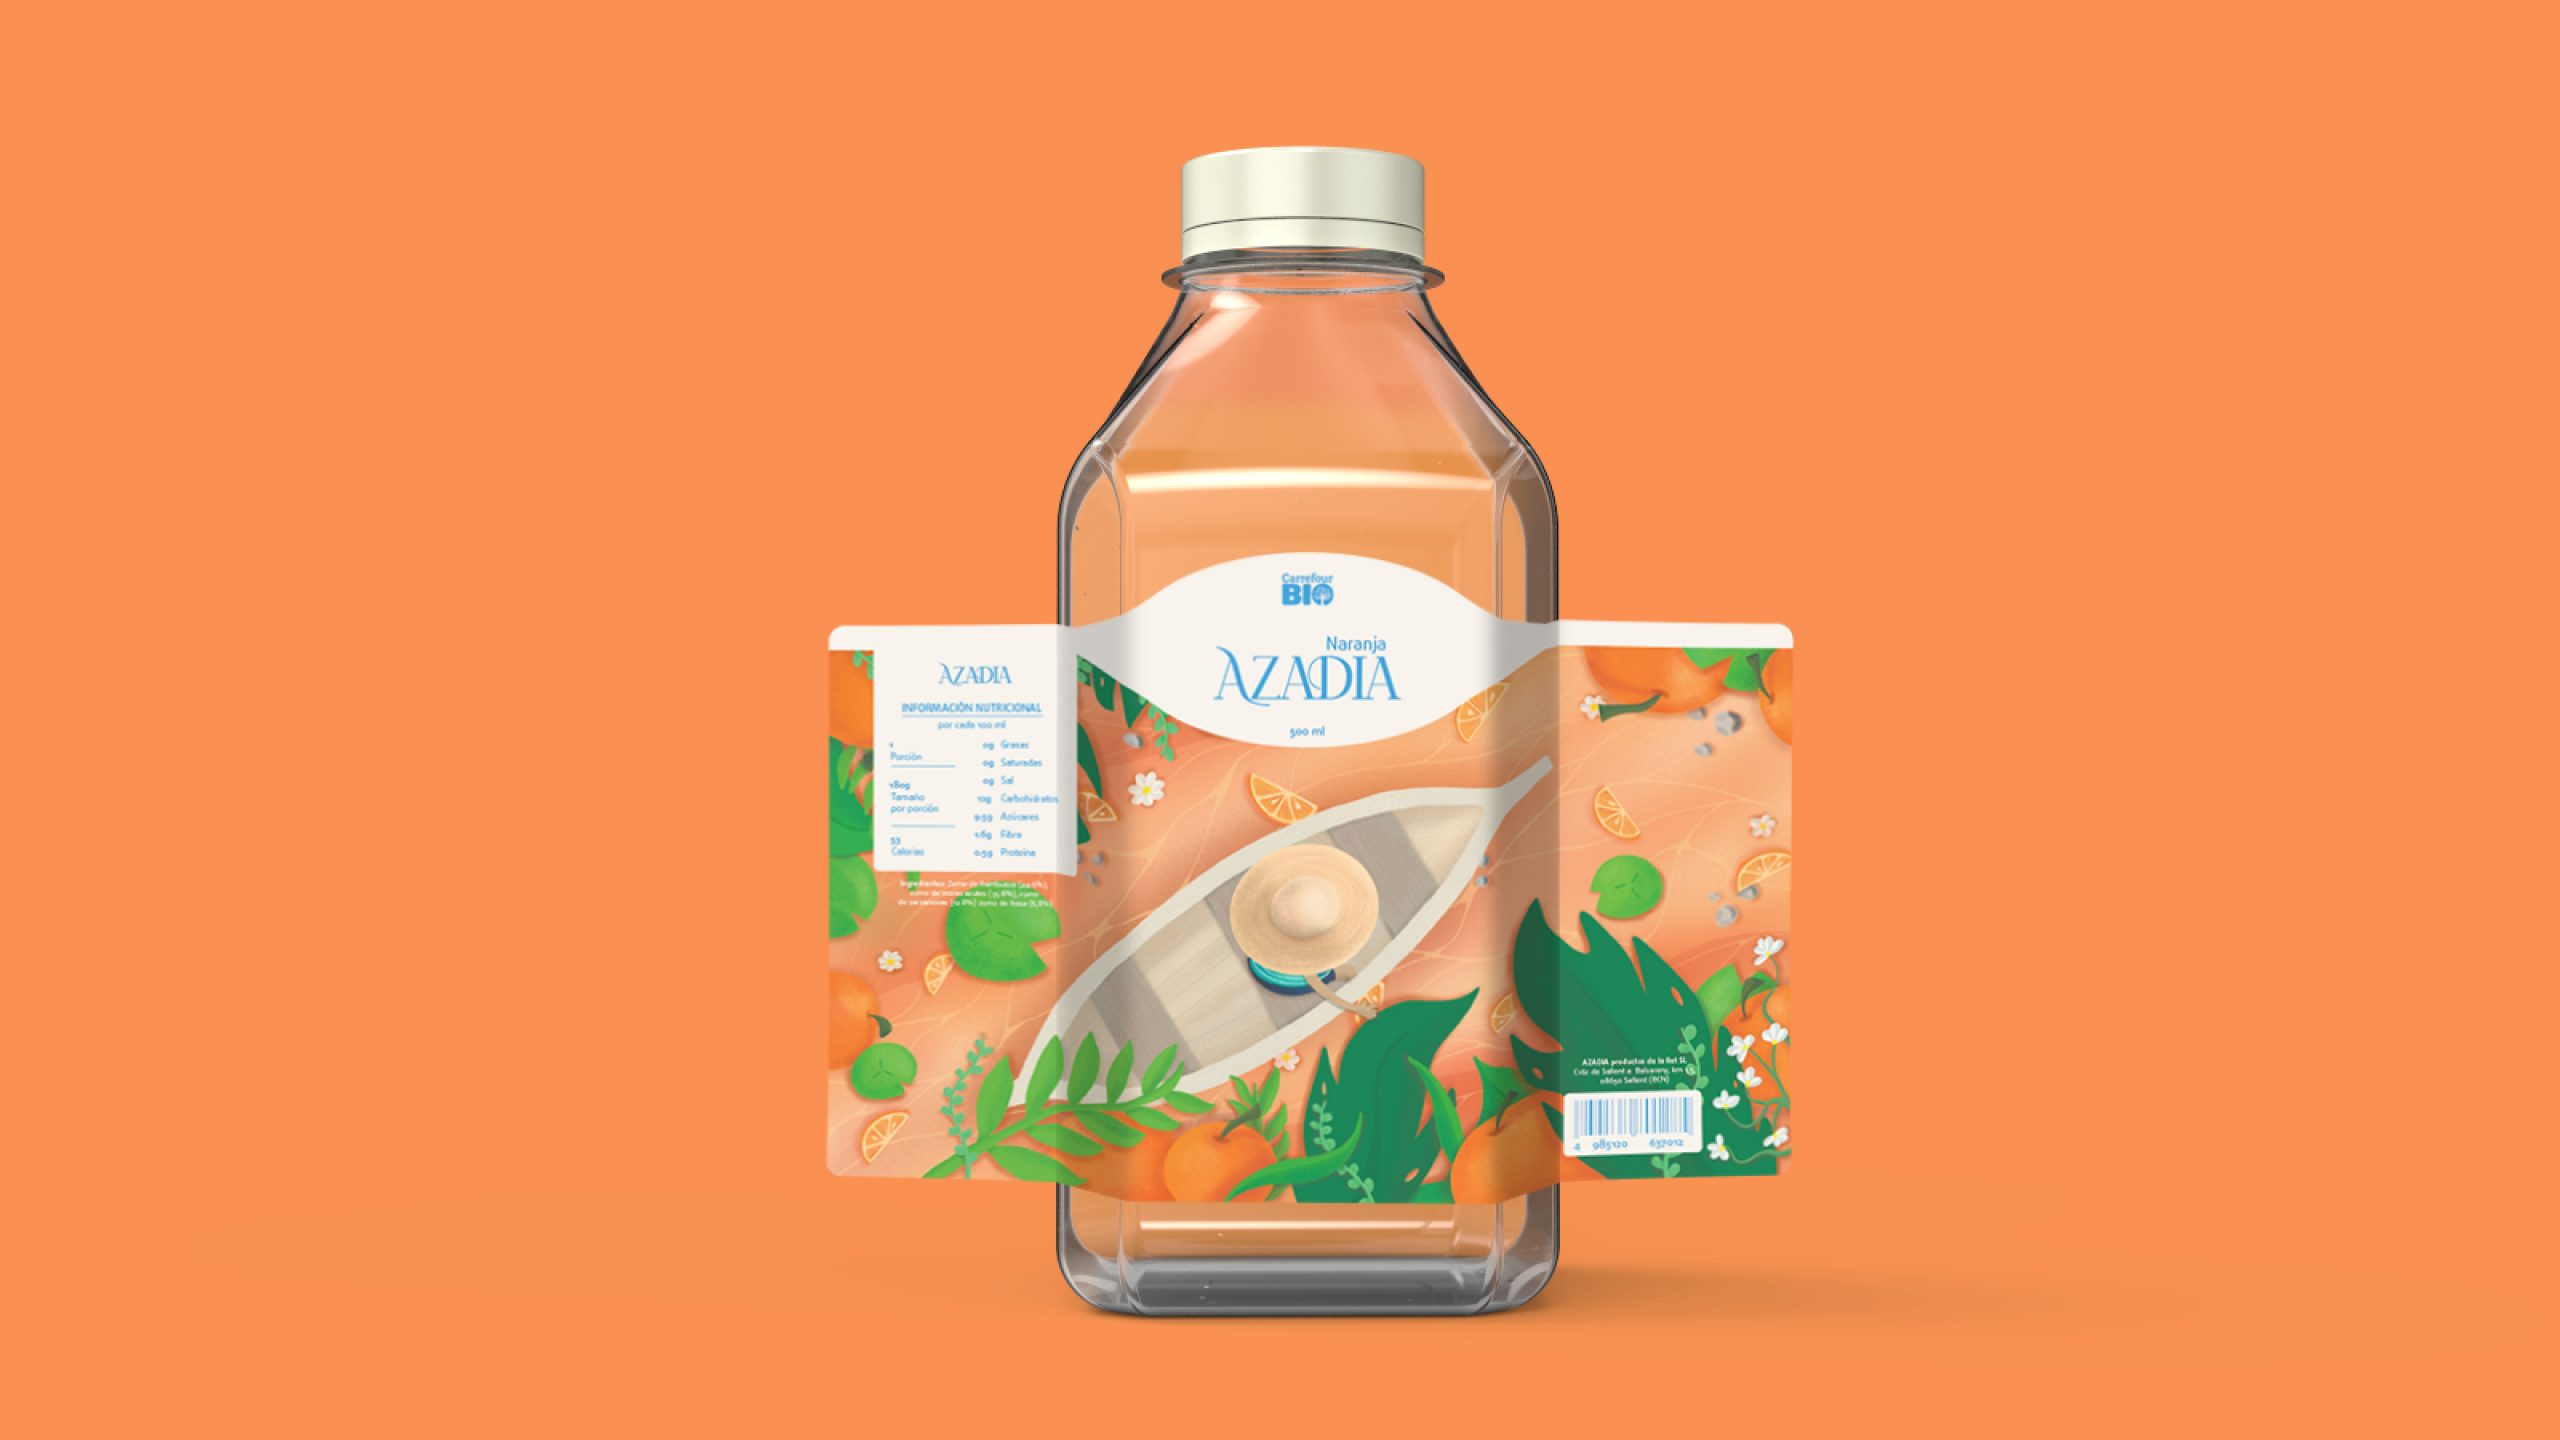 bottle of orange juice with label for AZADIA's juice range